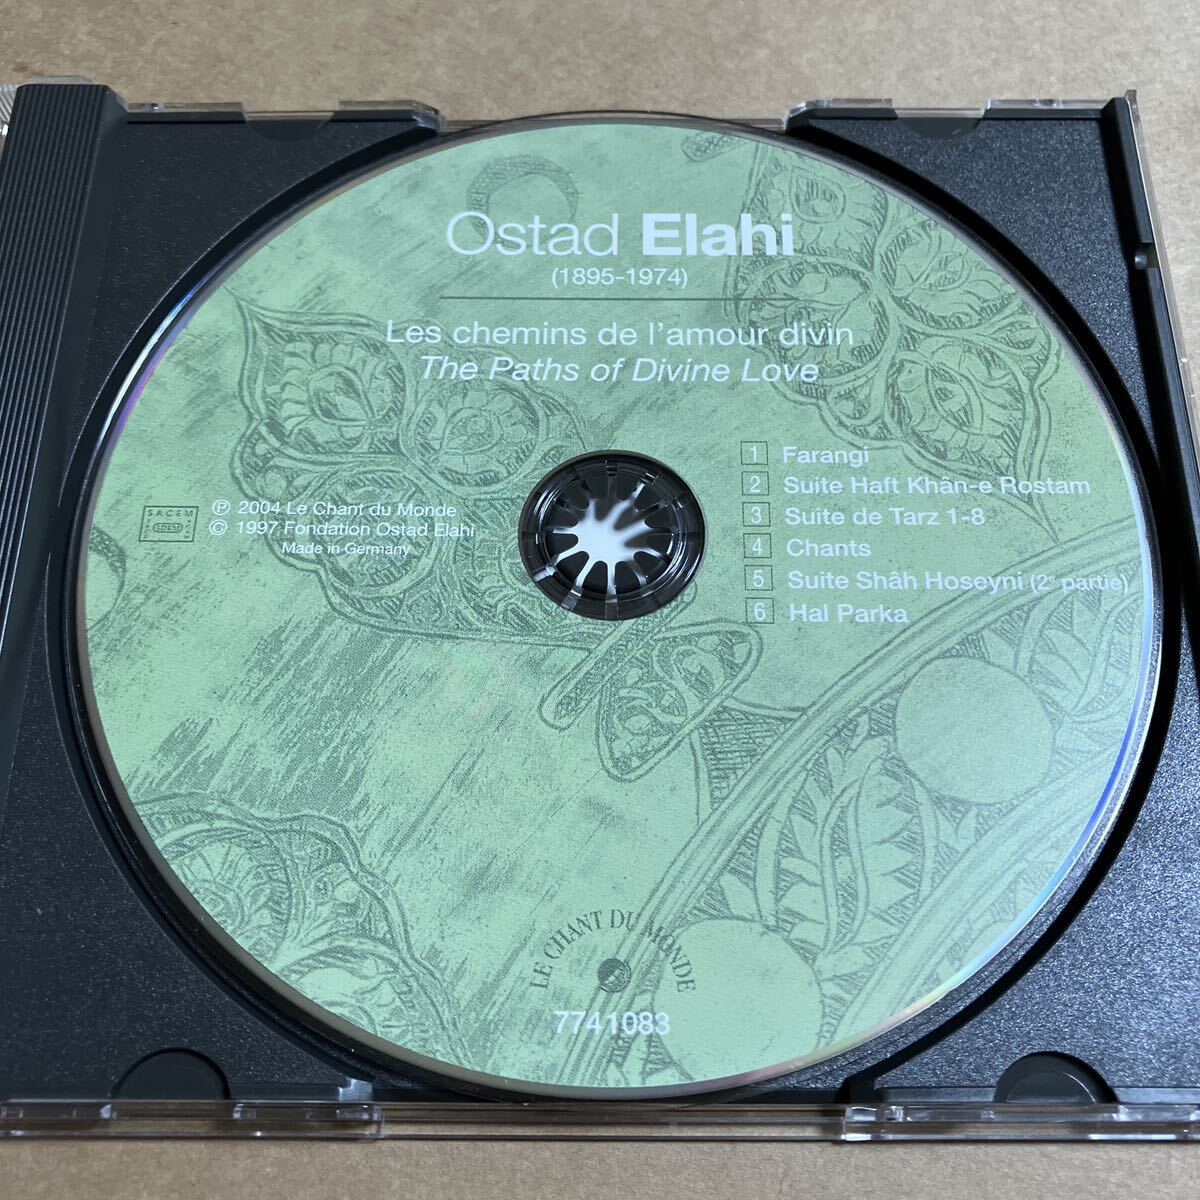 CD OSTAD ELAHI / THE PATHS OF DIVINE LOVE 7741083o stud * ошибка hiIRANi Ran 